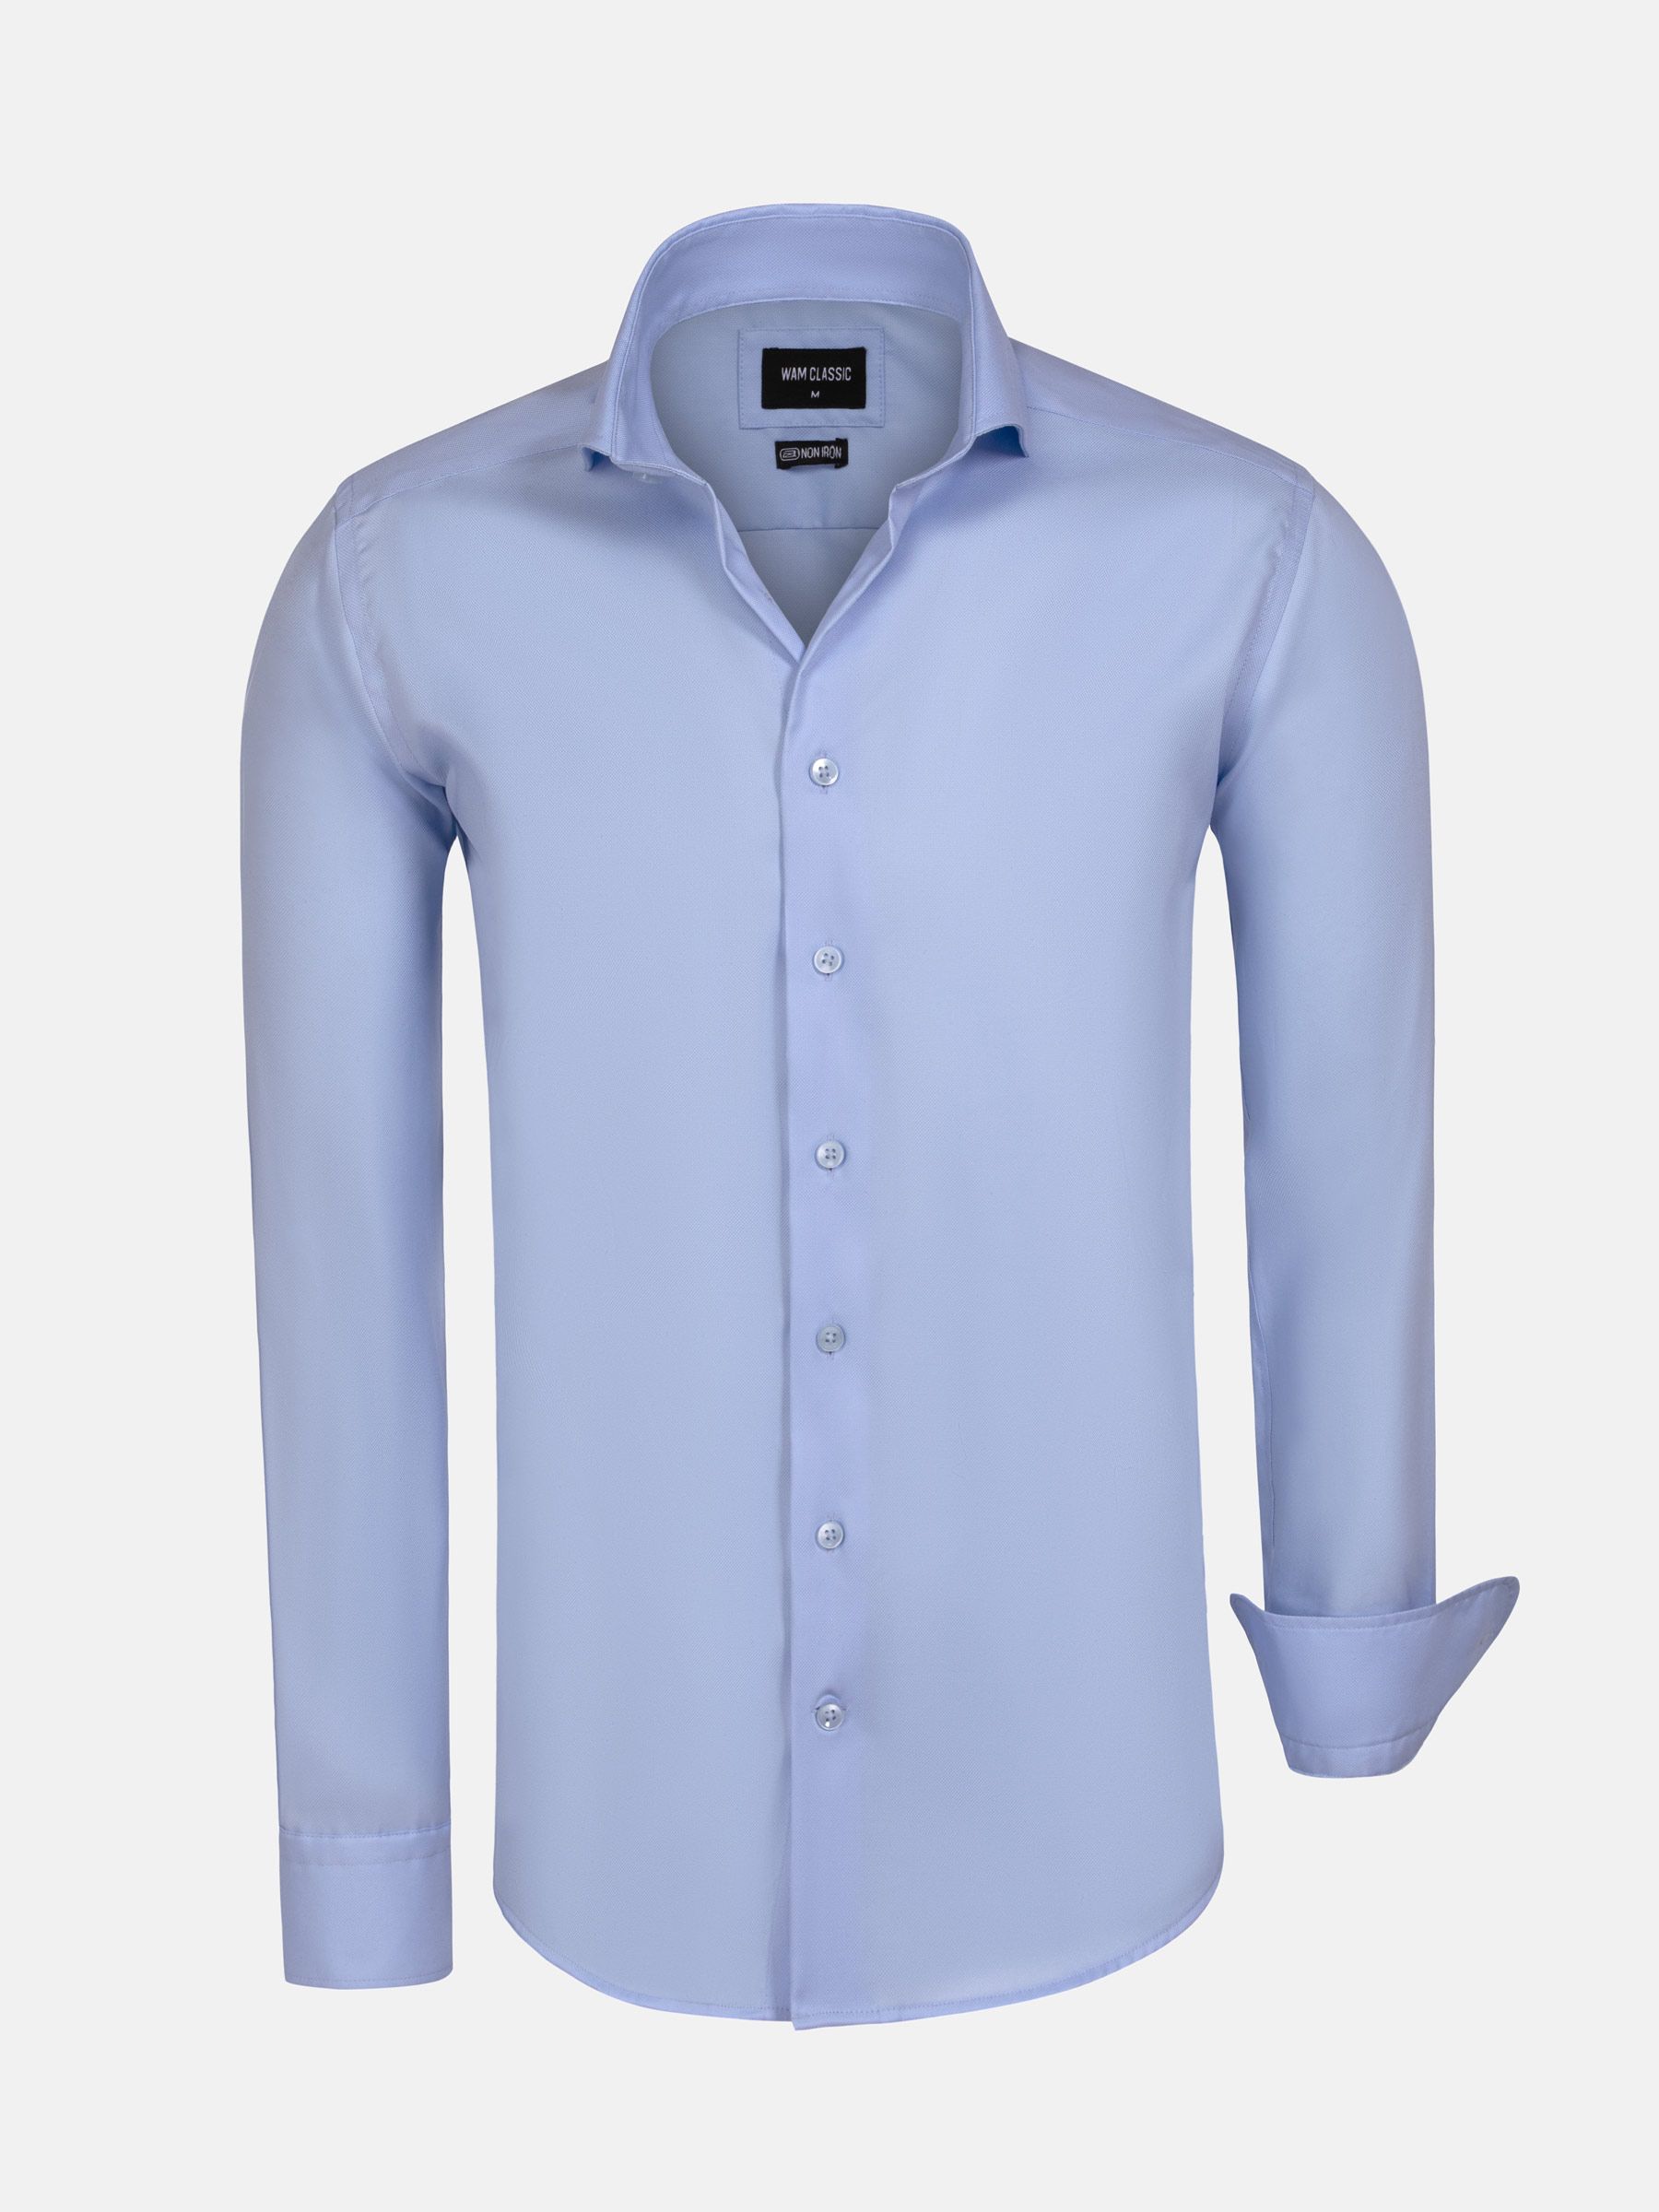 Key Shirts: Men's Long-Sleeve 542 45 Cotton Canvas Button-Down Work Shirt